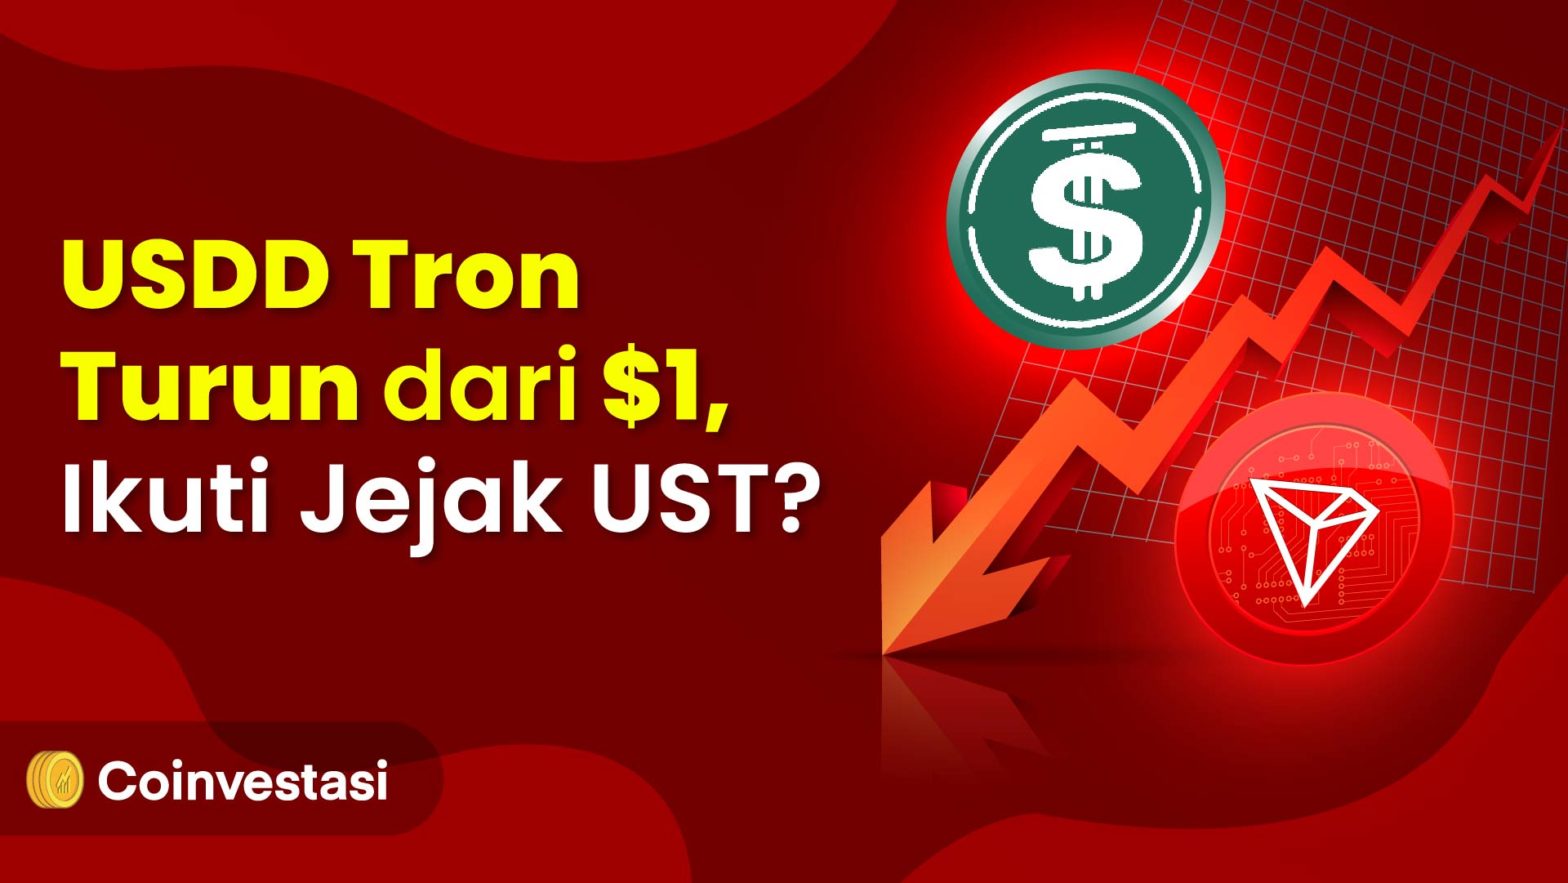 USDD Tron Turun dari $1, Ikuti Jejak UST?